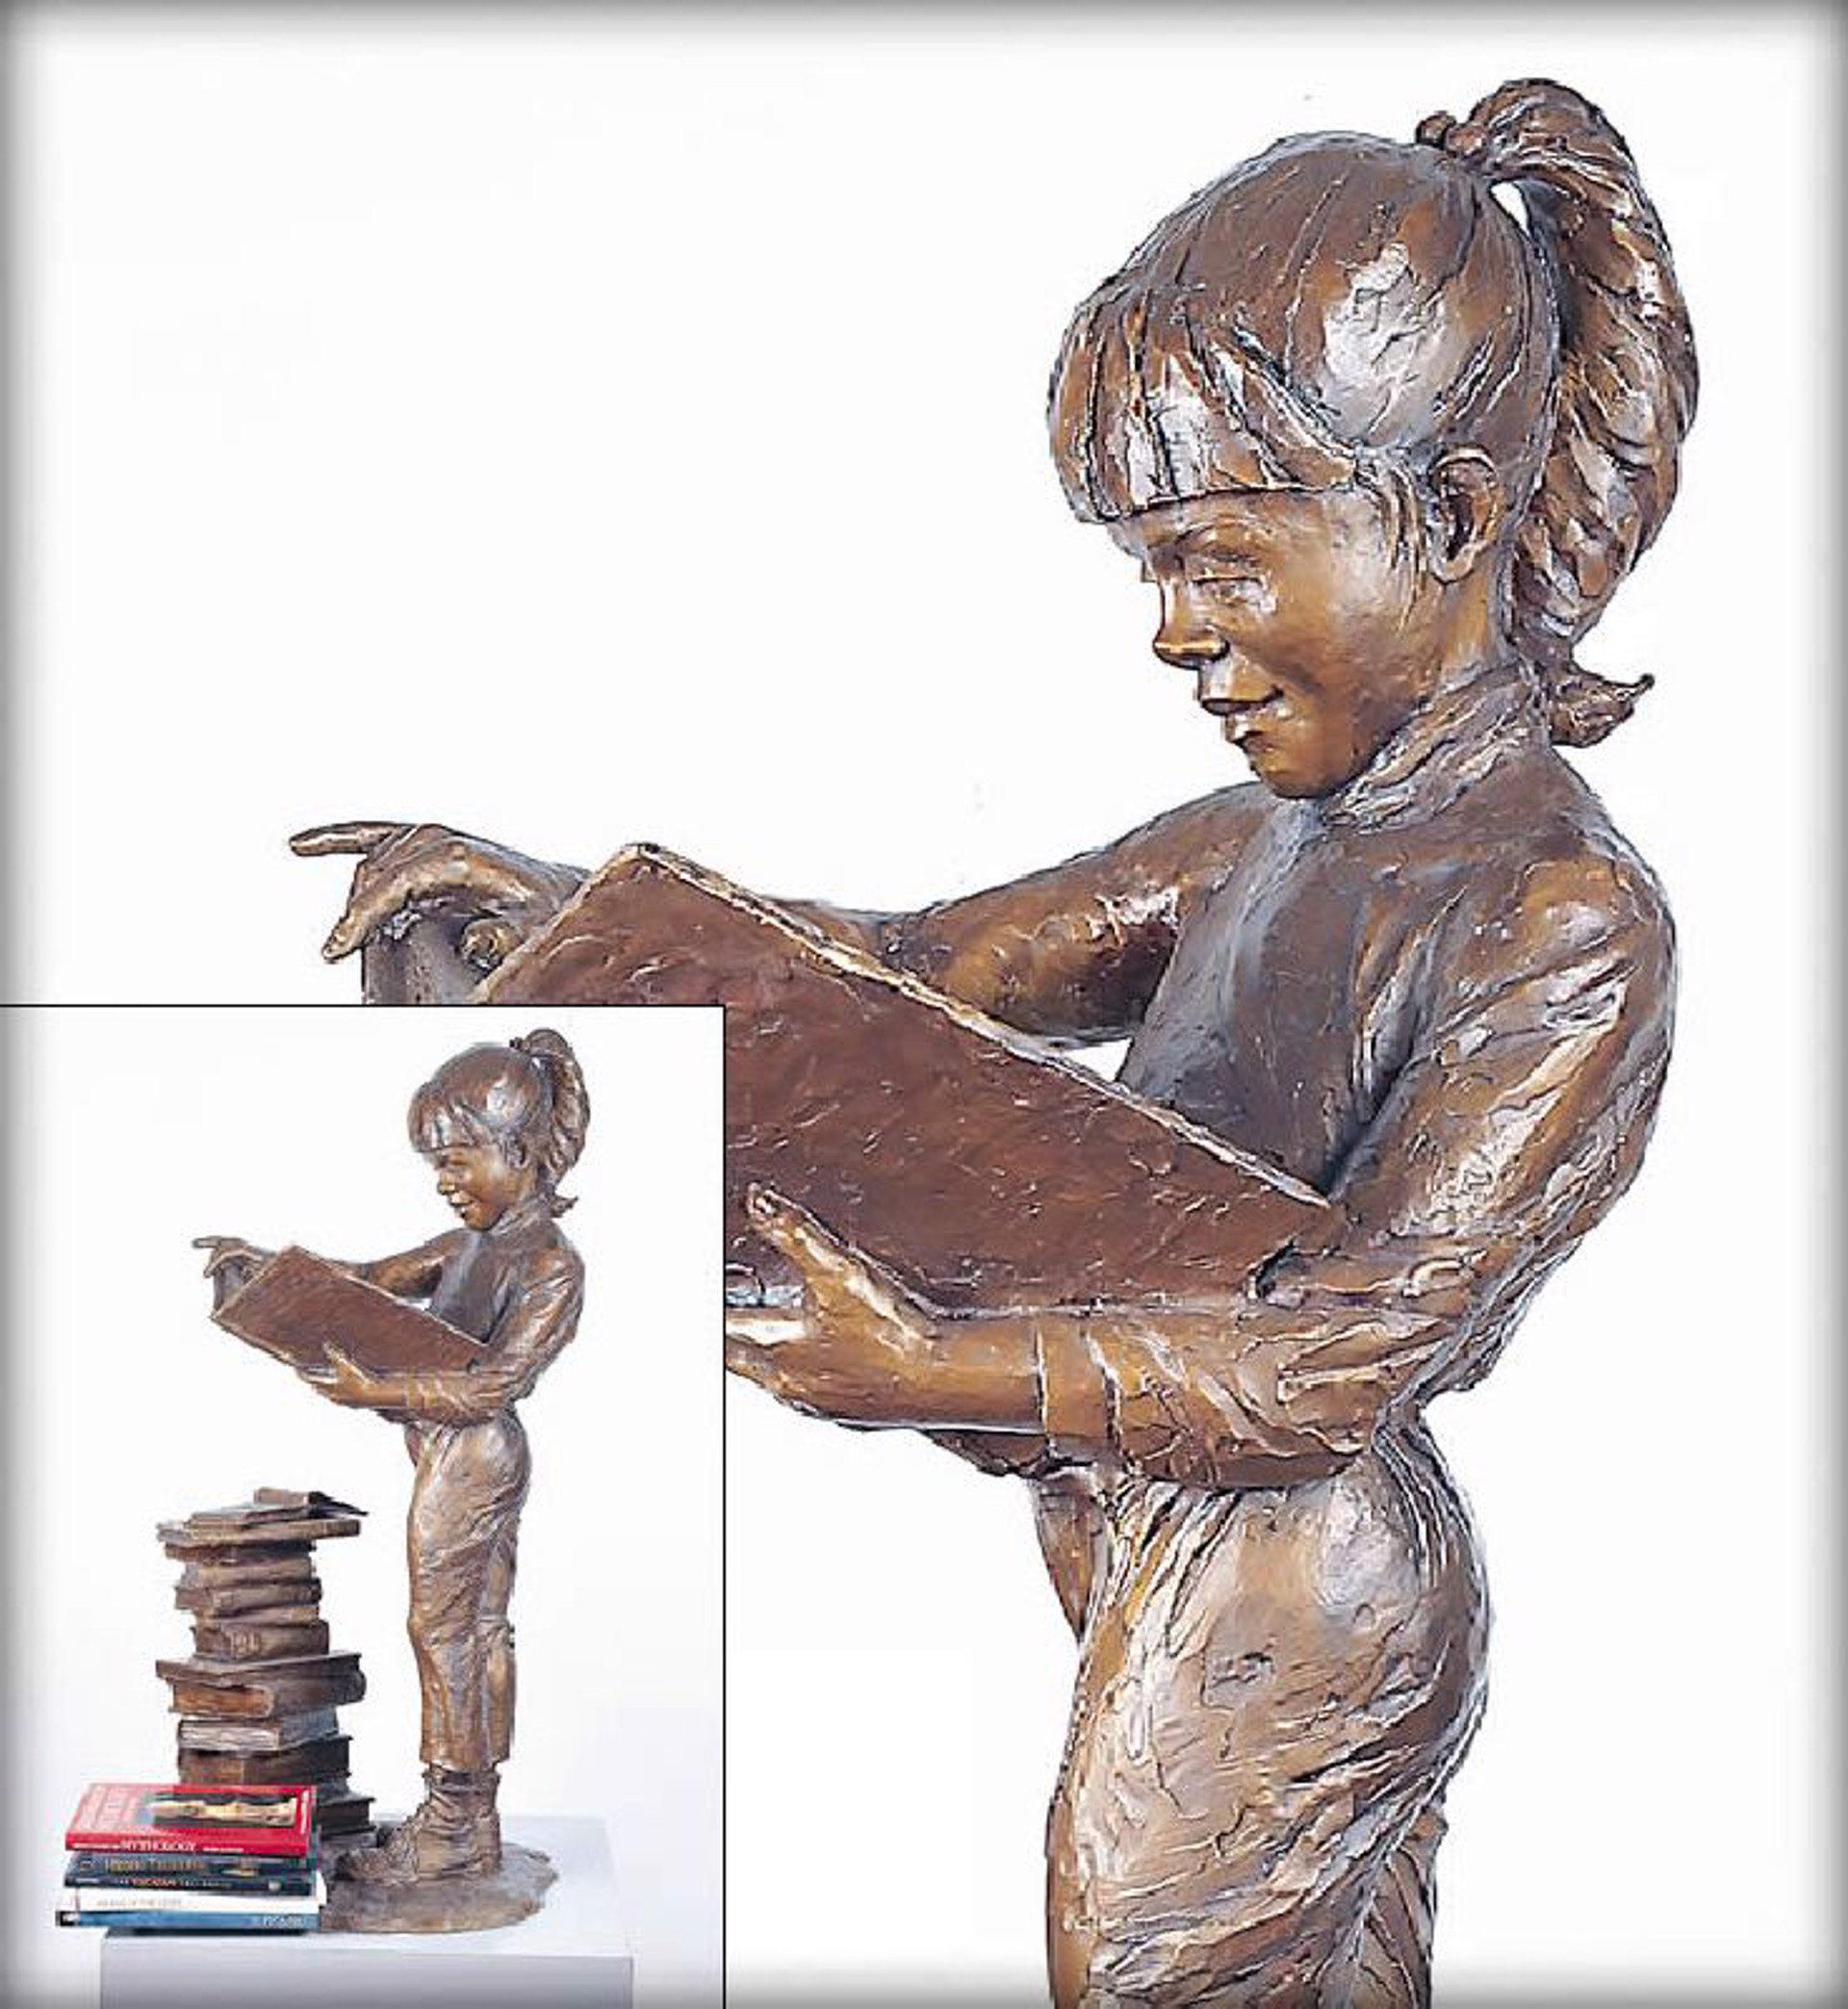 Bookworm II by Gary Lee Price (sculptor)